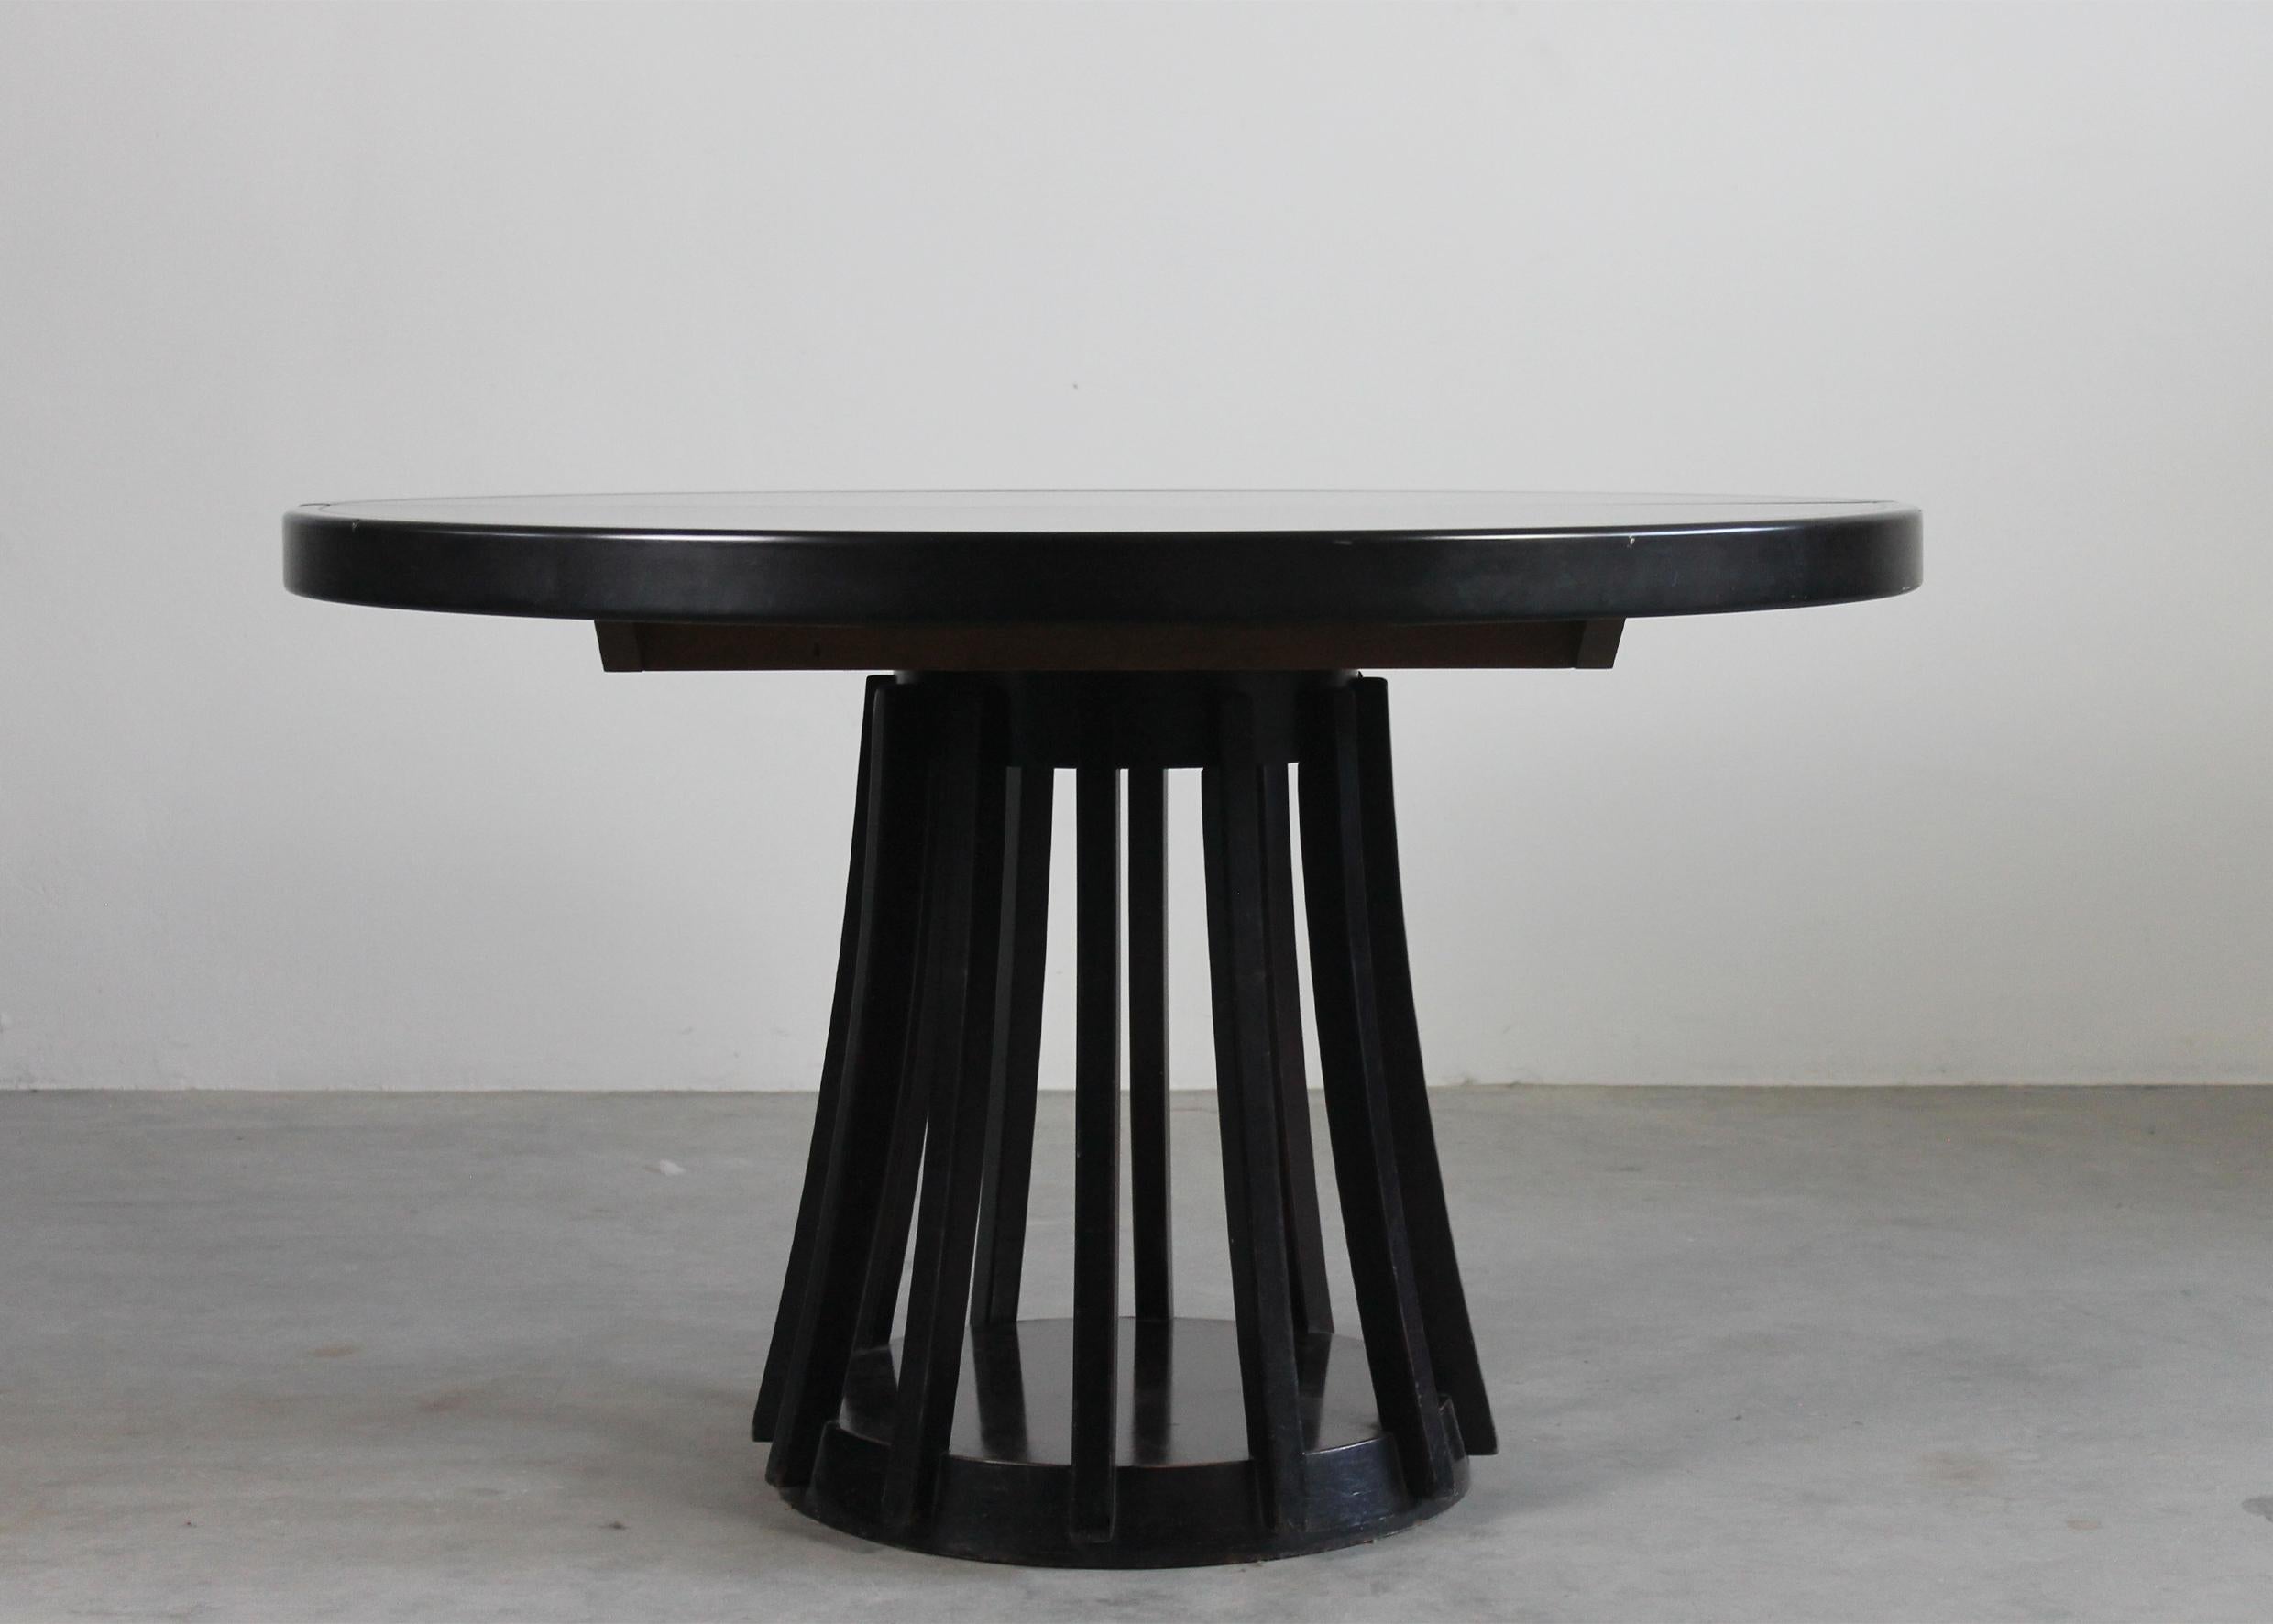 Mid-Century Modern Angelo Mangiarotti Programma S11 Extensible Table by Sorgente dei Mobili 1970s